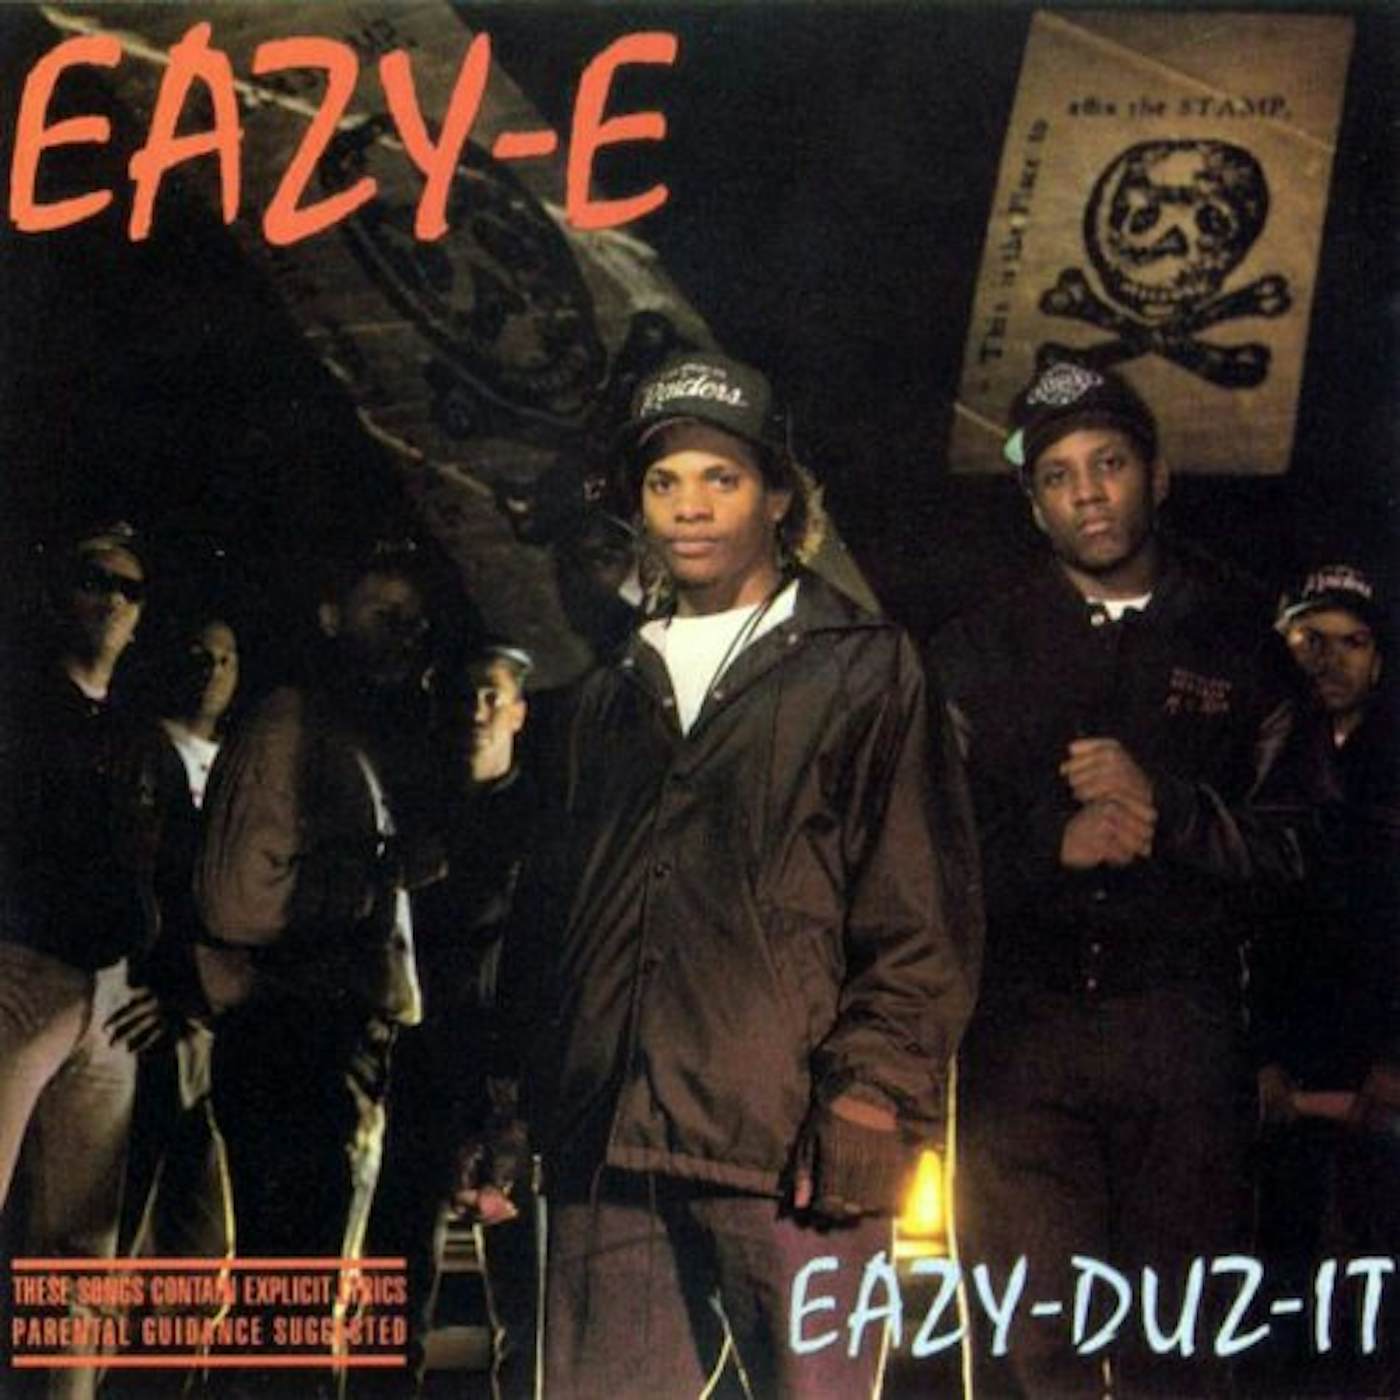 Eazy-E EAZY-DUZ-IT Vinyl Record - UK Release